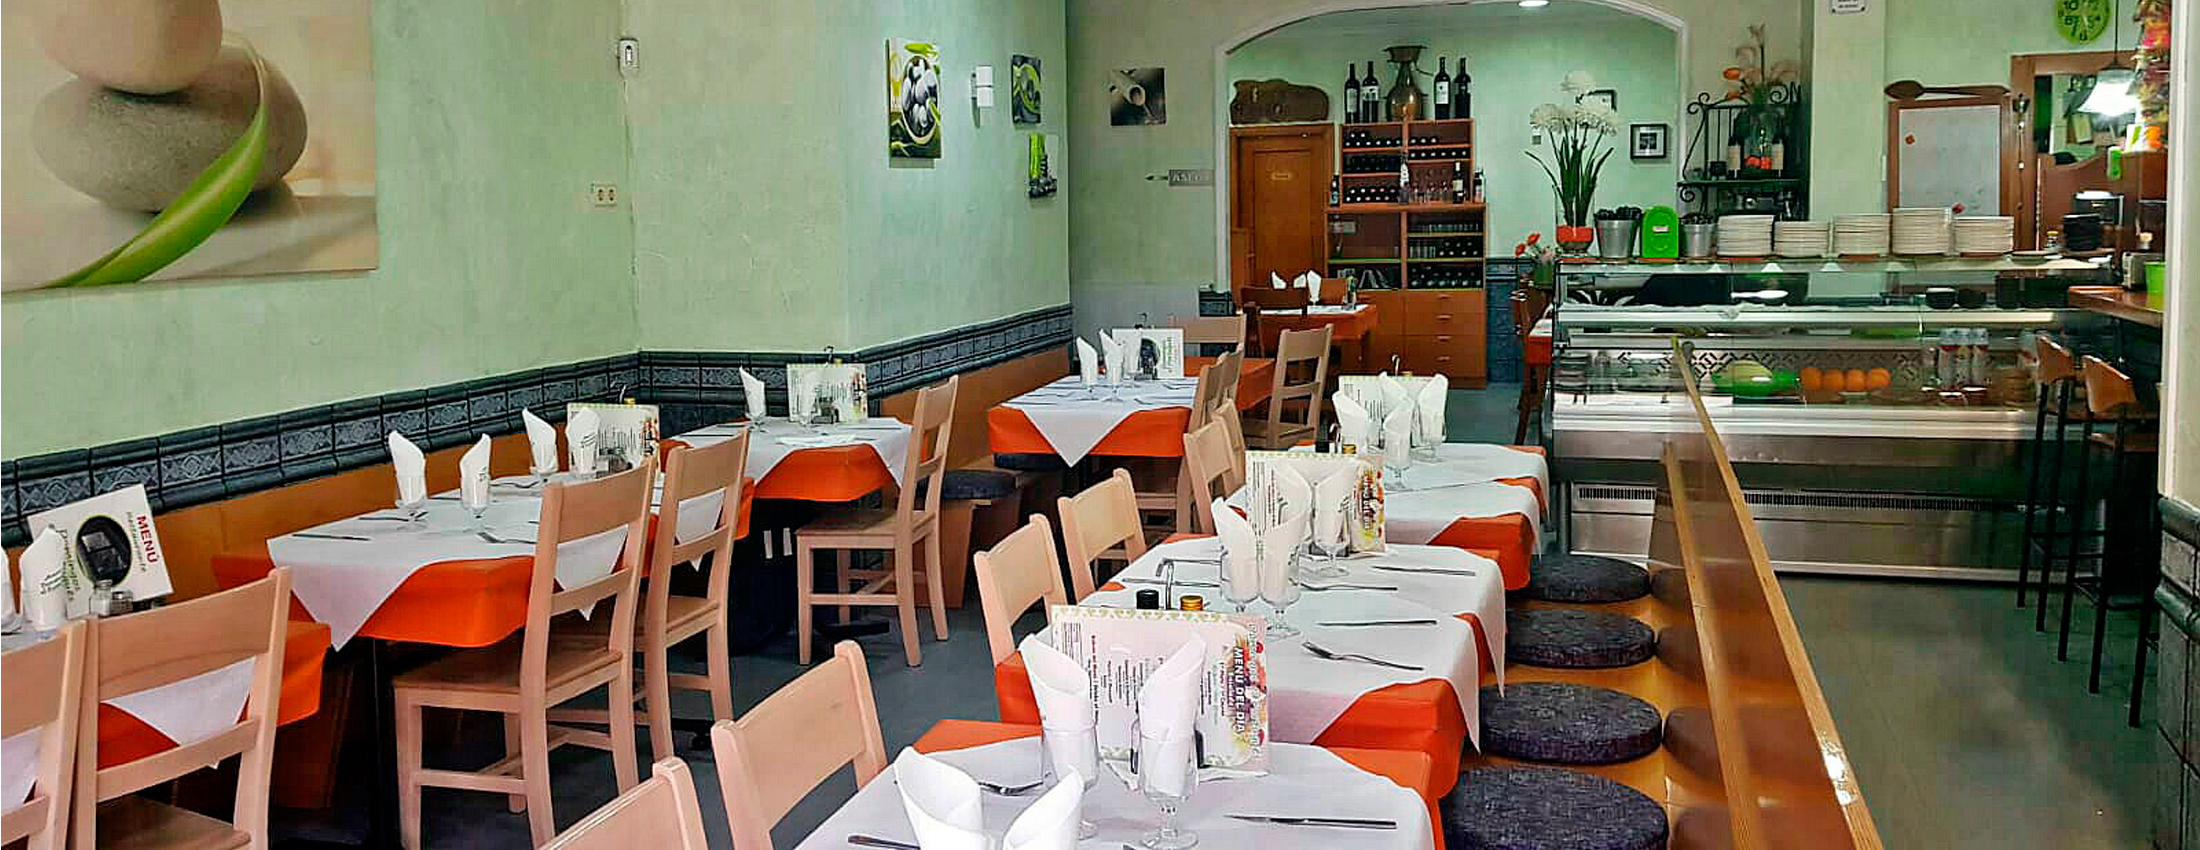 salon-interior-restaurante-el-português